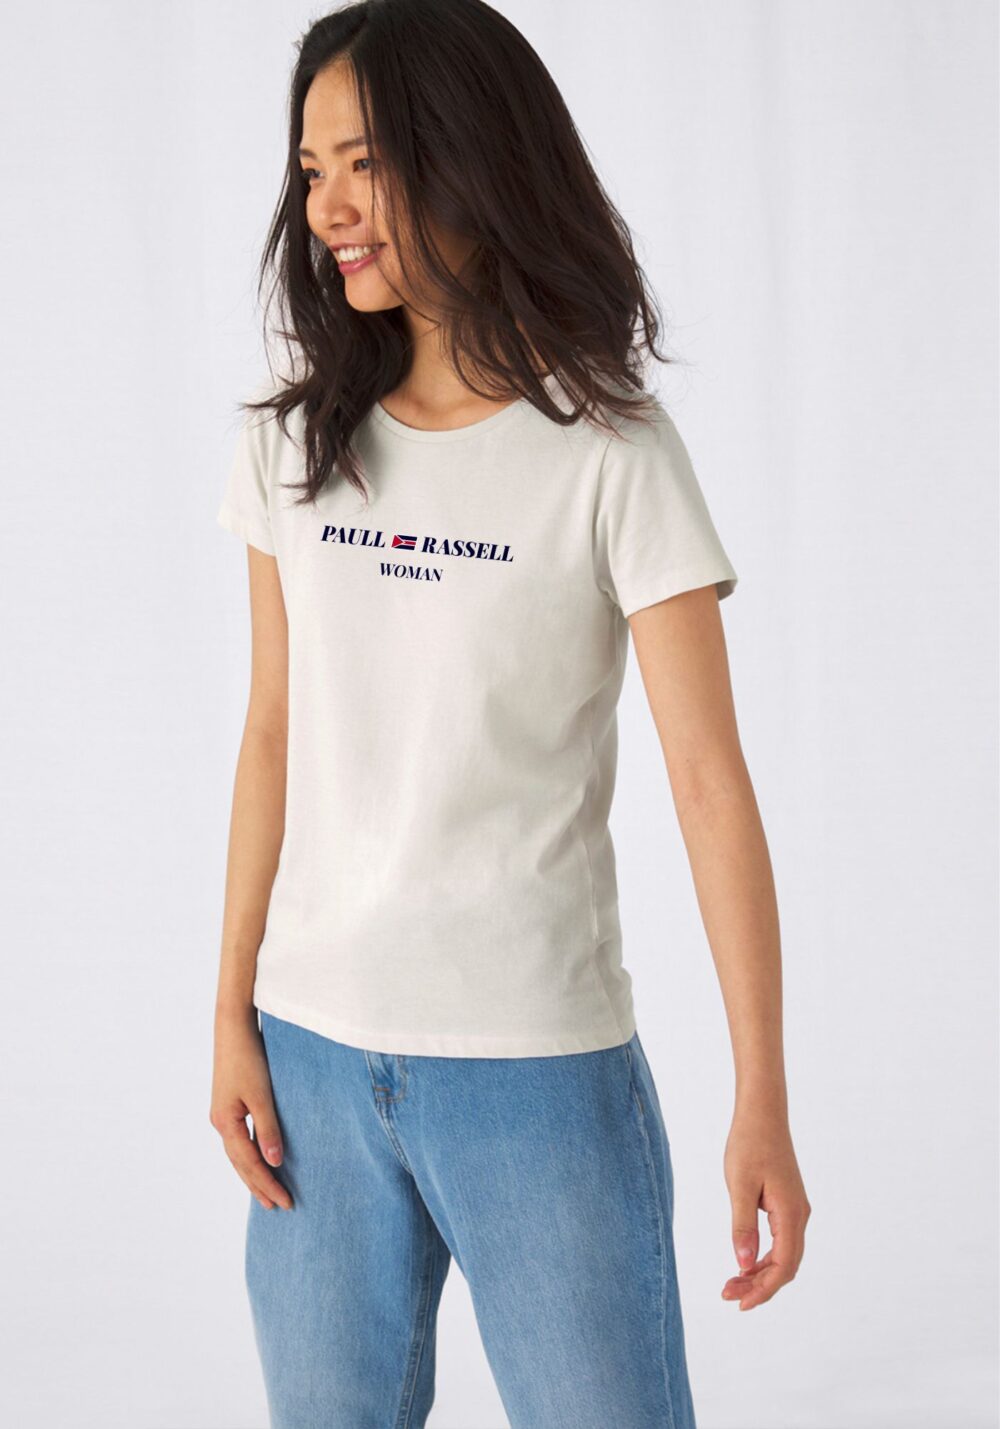 Paull Rassell Elite-Organic-T-Shirt 802 - Camiseta-verano para mujer - camiseta orgánica para mujer - camiseta de mangas cortas